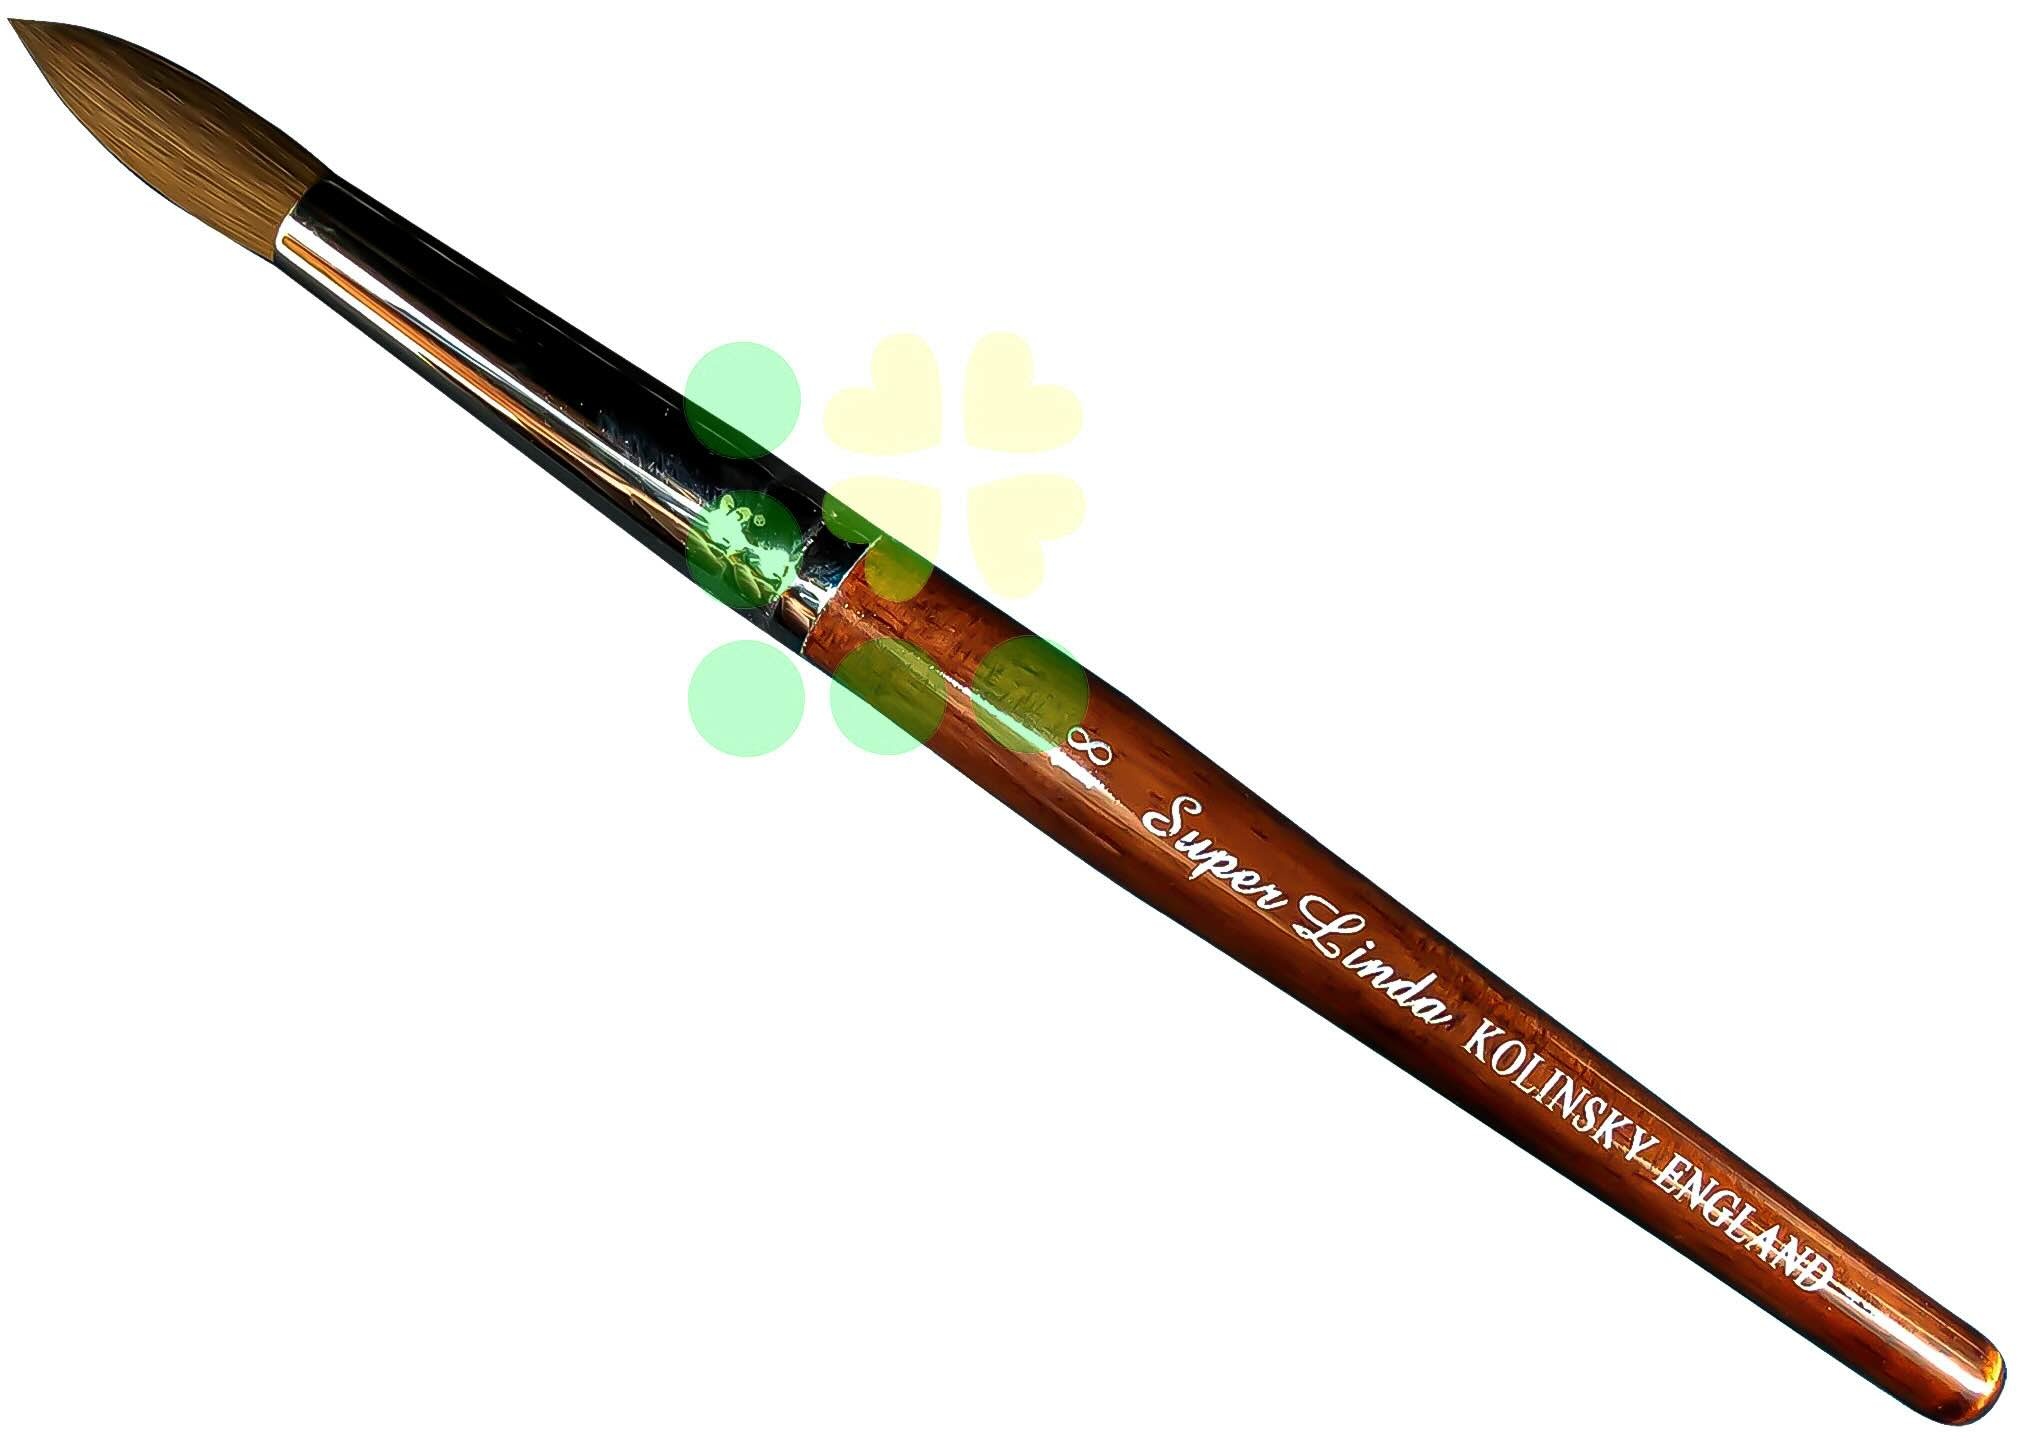 Saviland Acrylic Nail Brush (Size 12) - Kolinsky Acrylic Brush for Acrylic  Powd | eBay